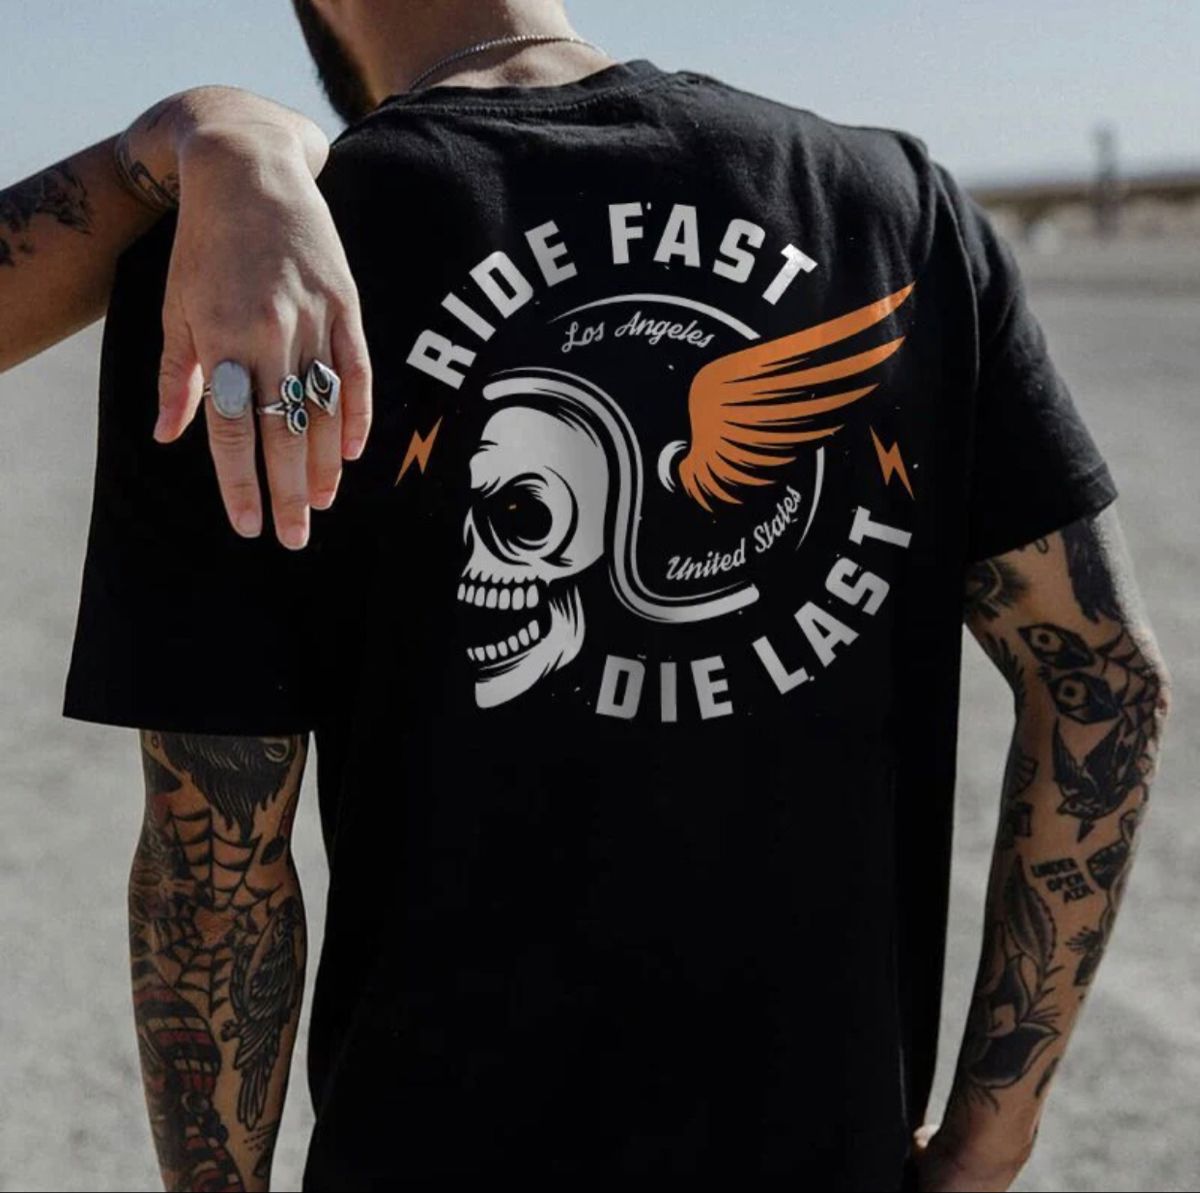 Ride Fast T-shirt